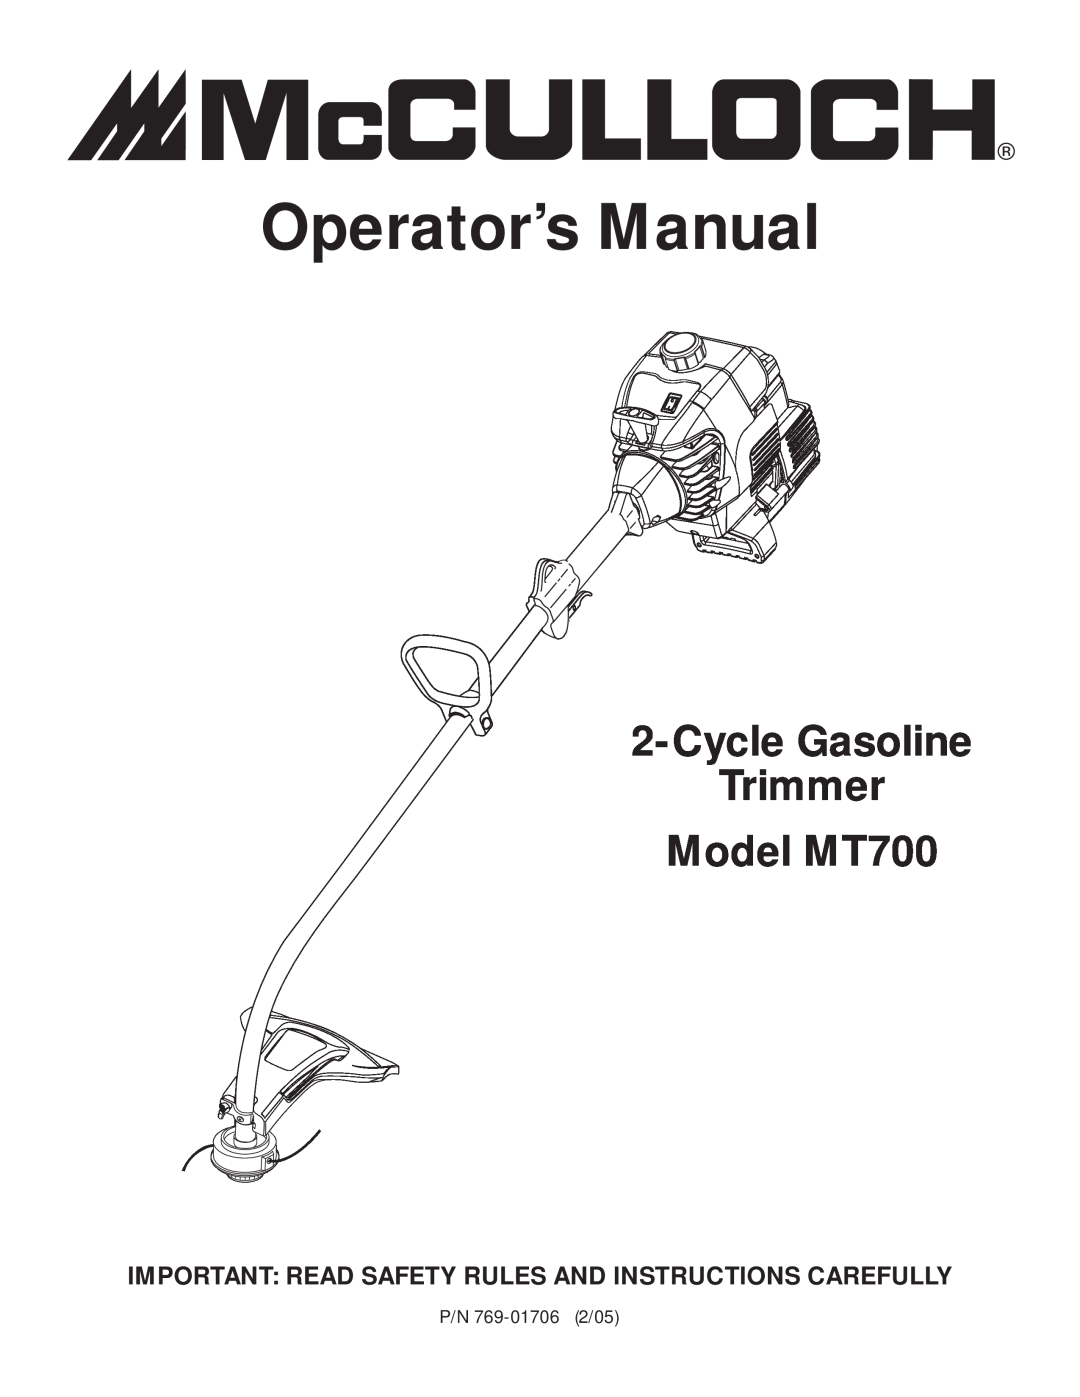 MTD manual Operator’s Manual, Cycle Gasoline Trimmer Model MT700 